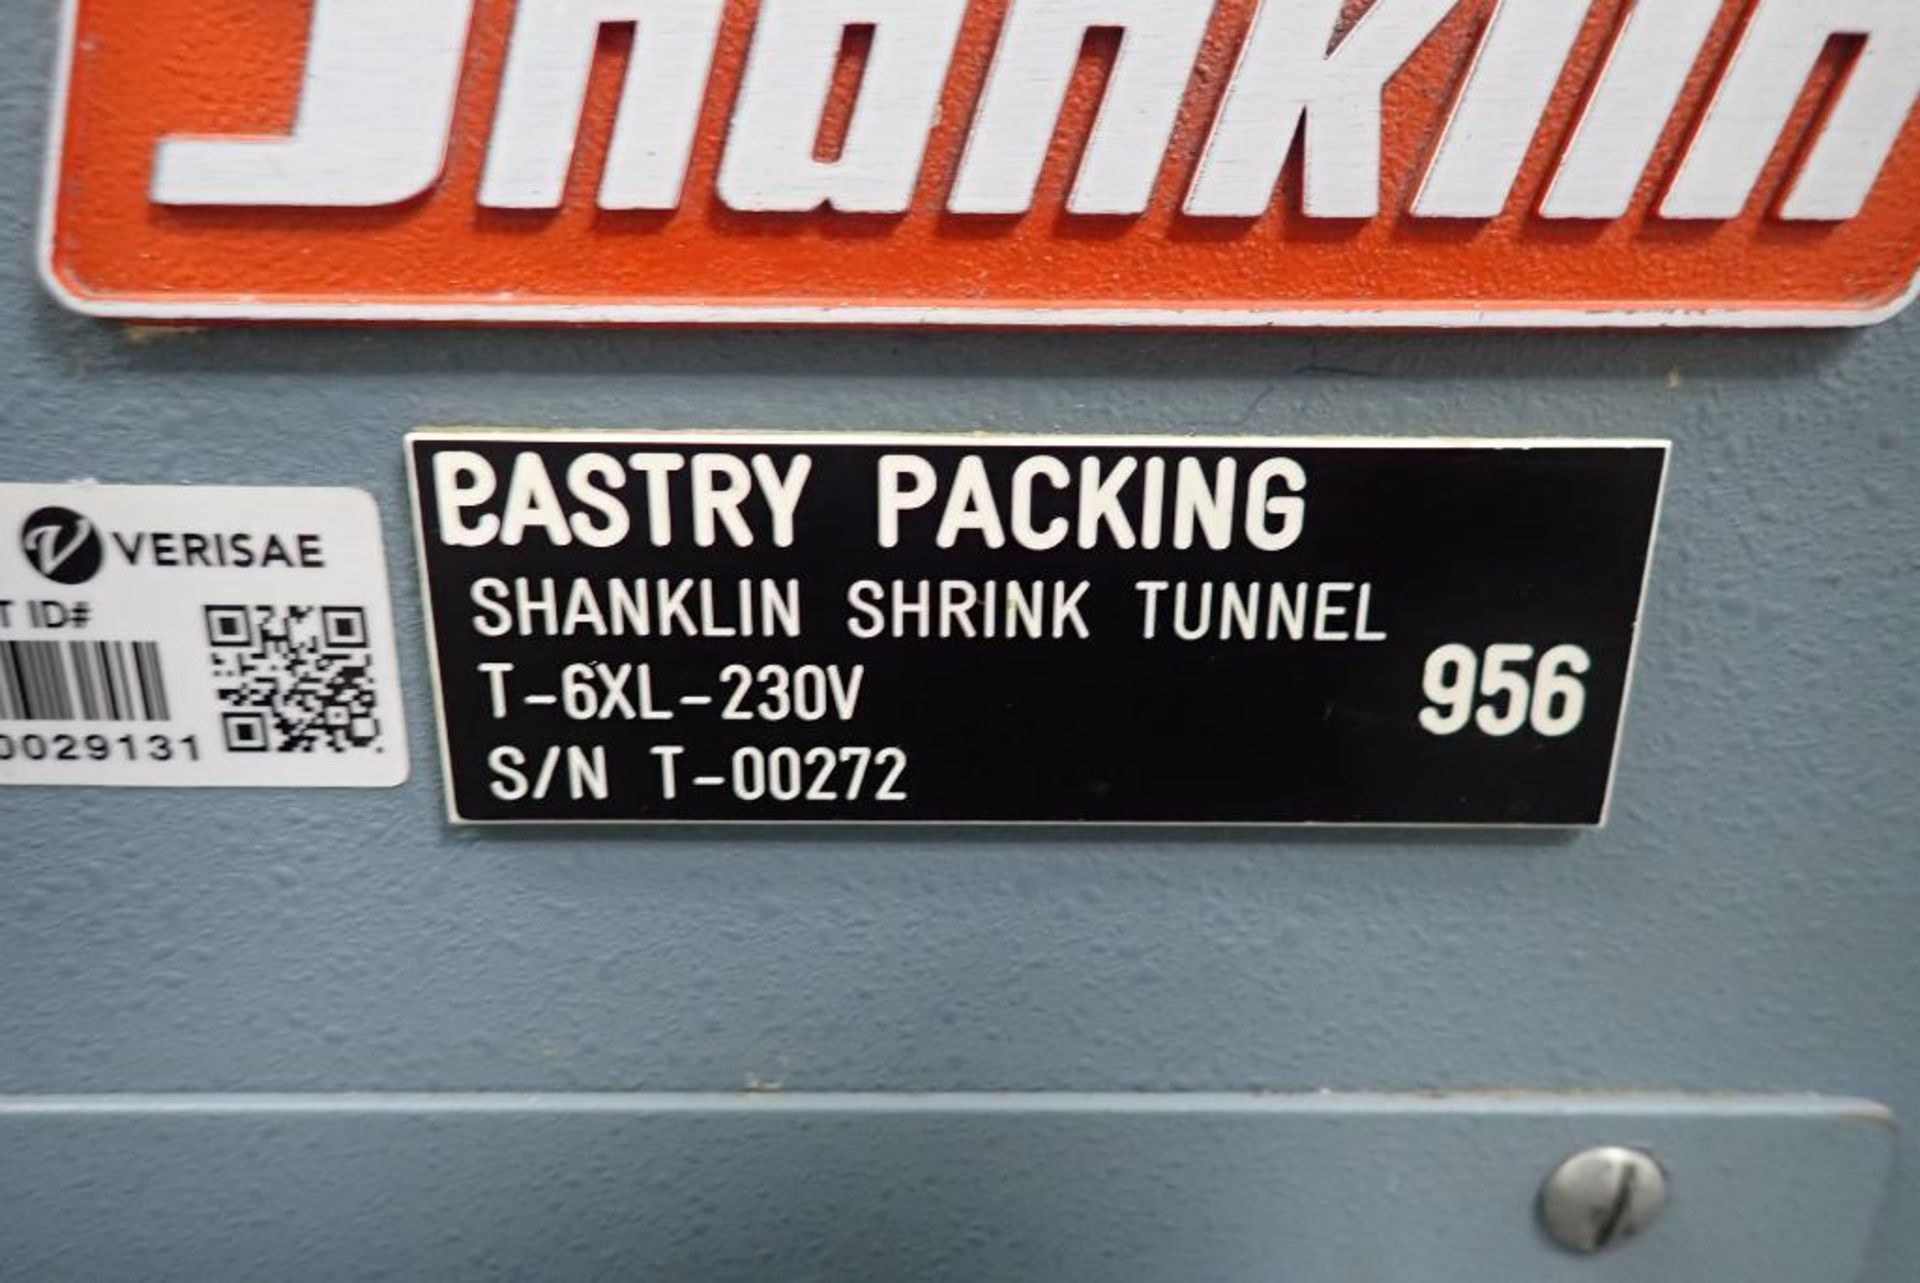 Shanklin heat shrink tunnel - Image 10 of 12